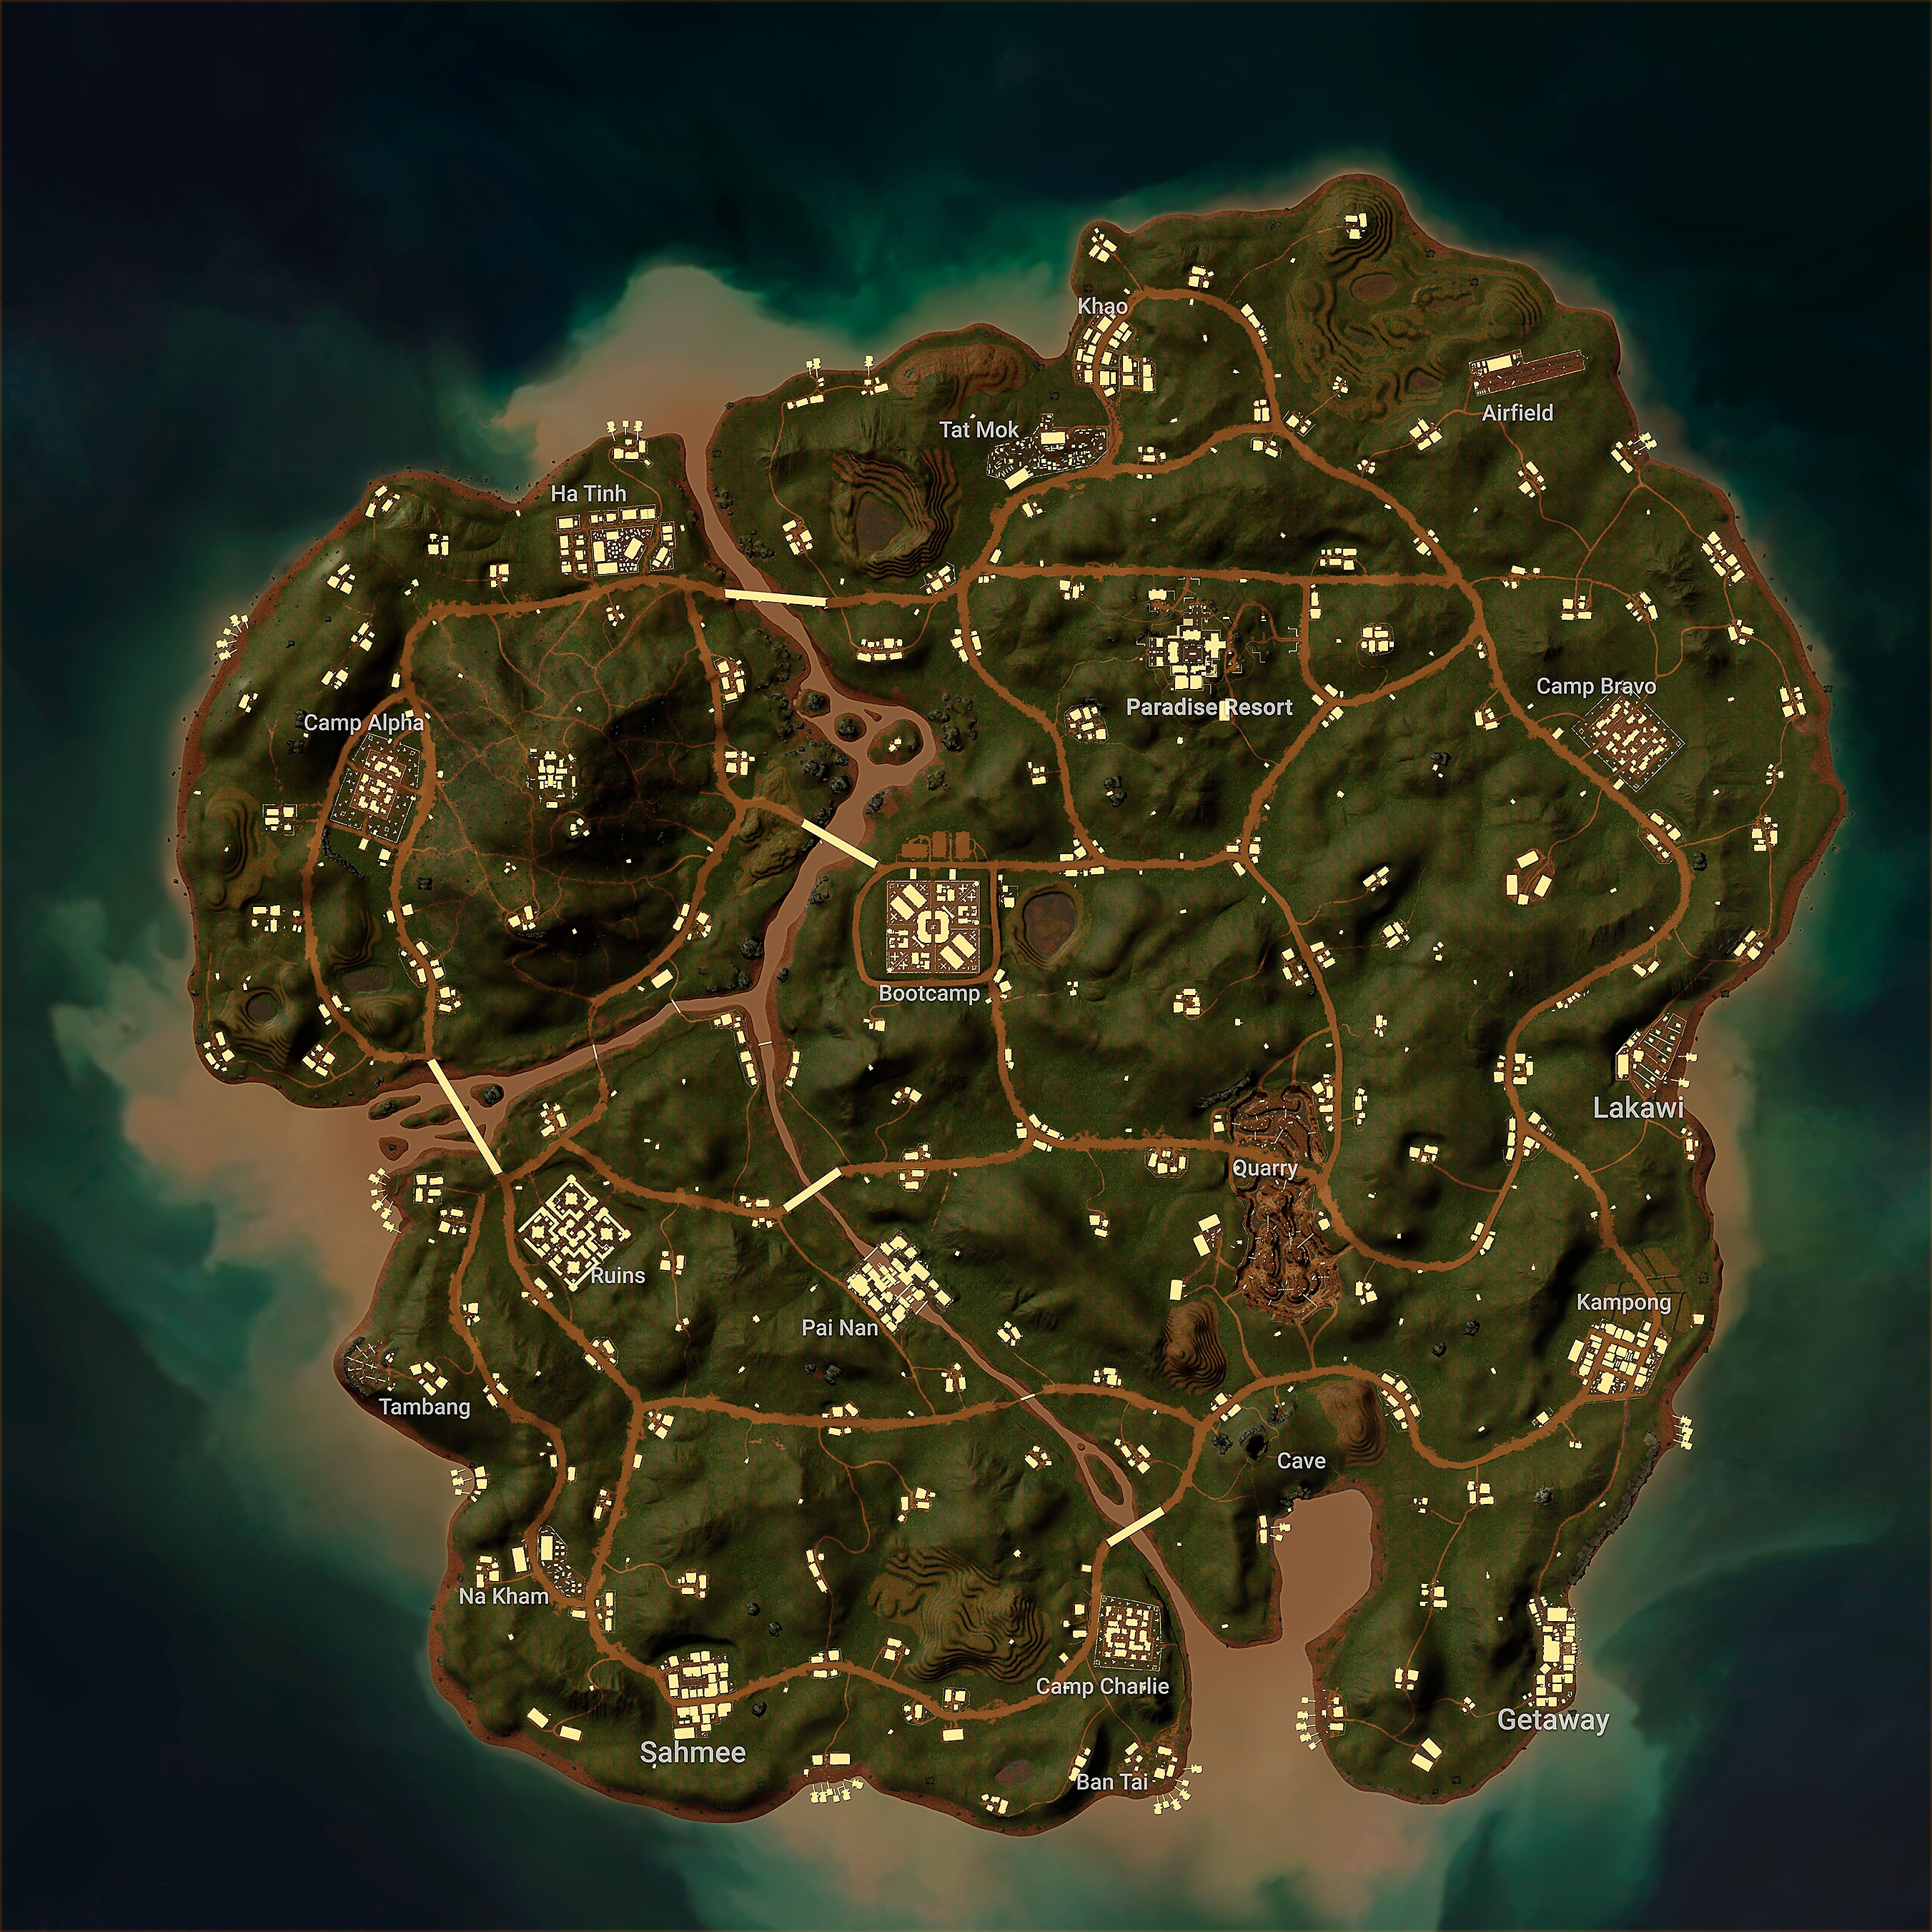 《PUBG:Battlegrounds》地图 - 萨诺